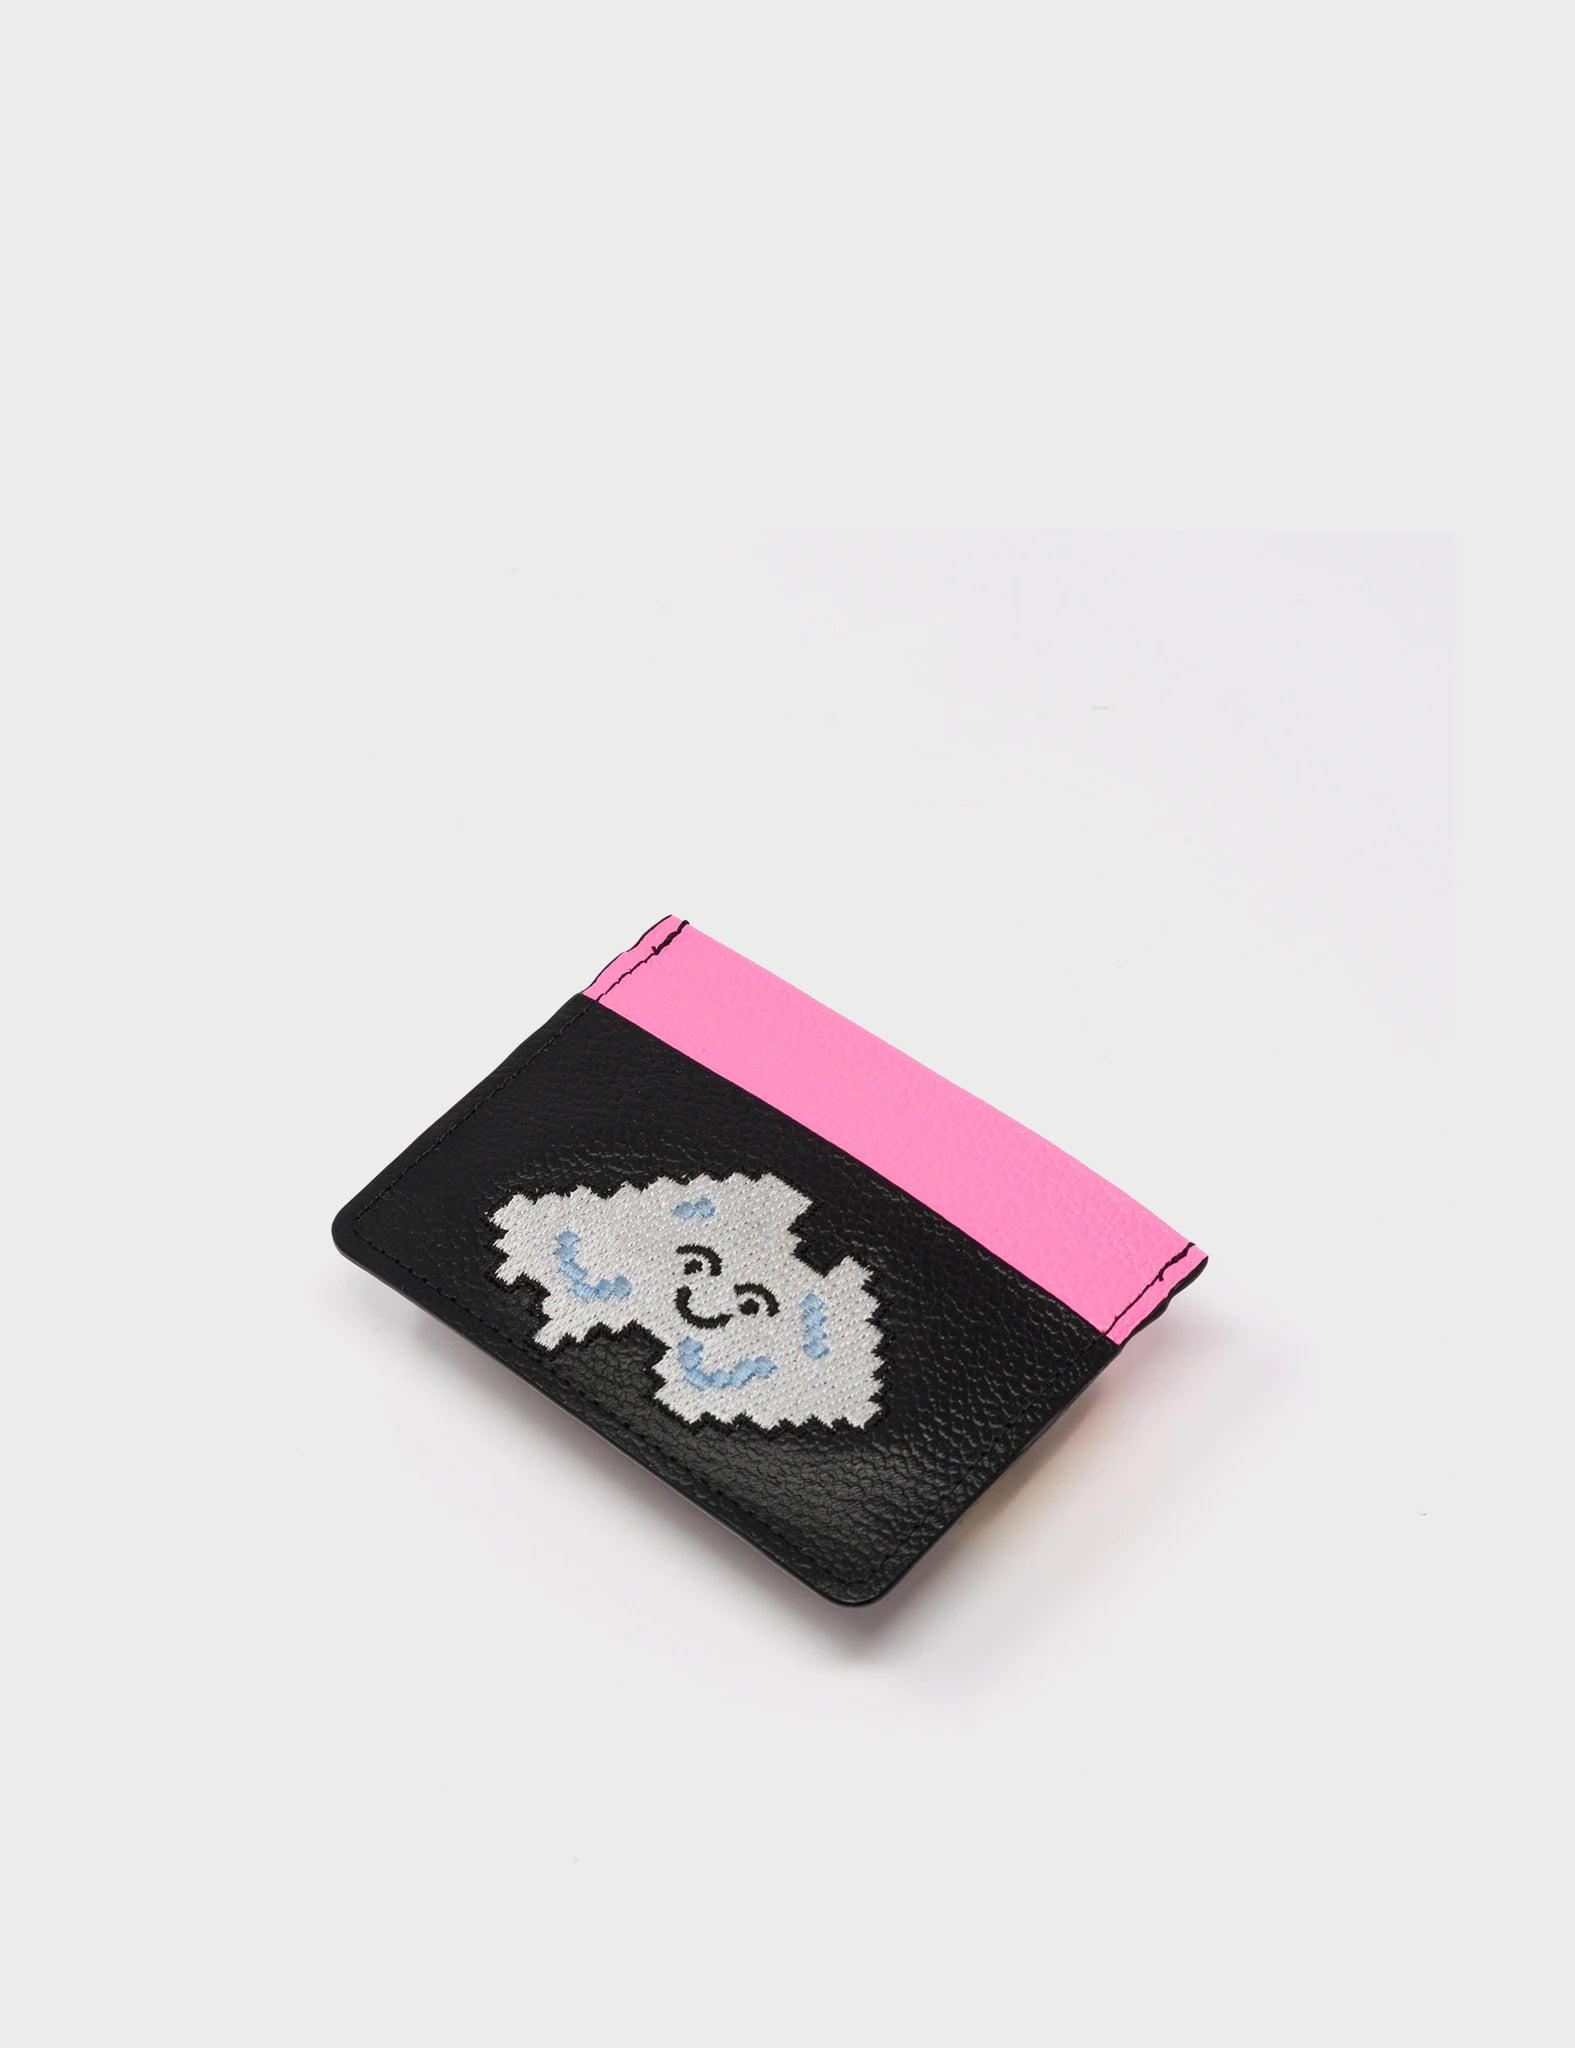 Filium Pink and Black Leather Cardholder - Cloud Applique - Detail View